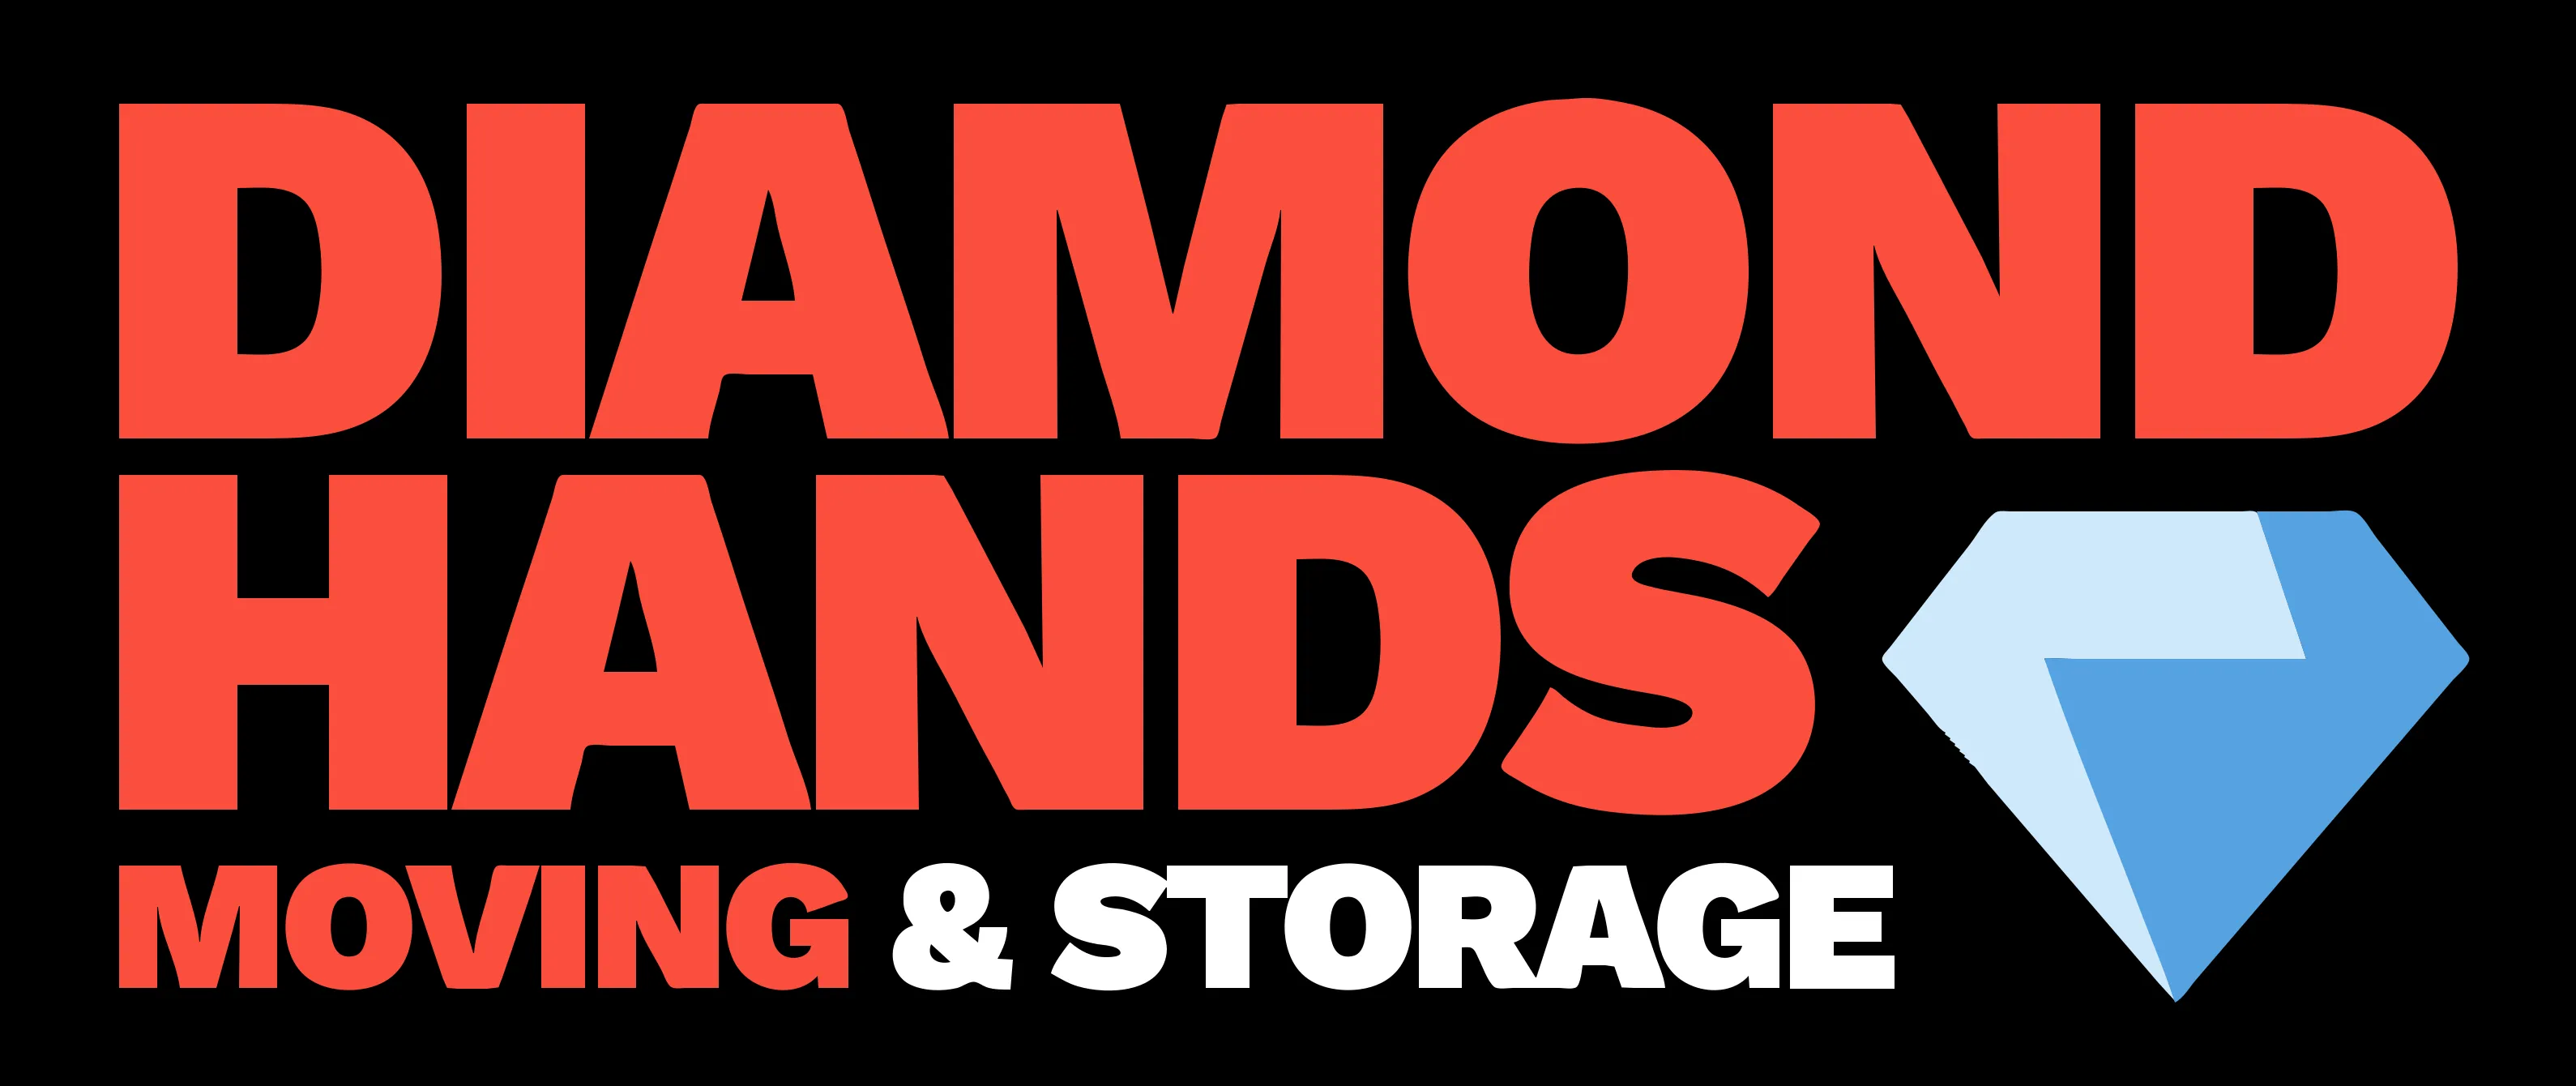 Diamond Hands Moving & Storage NYC logo